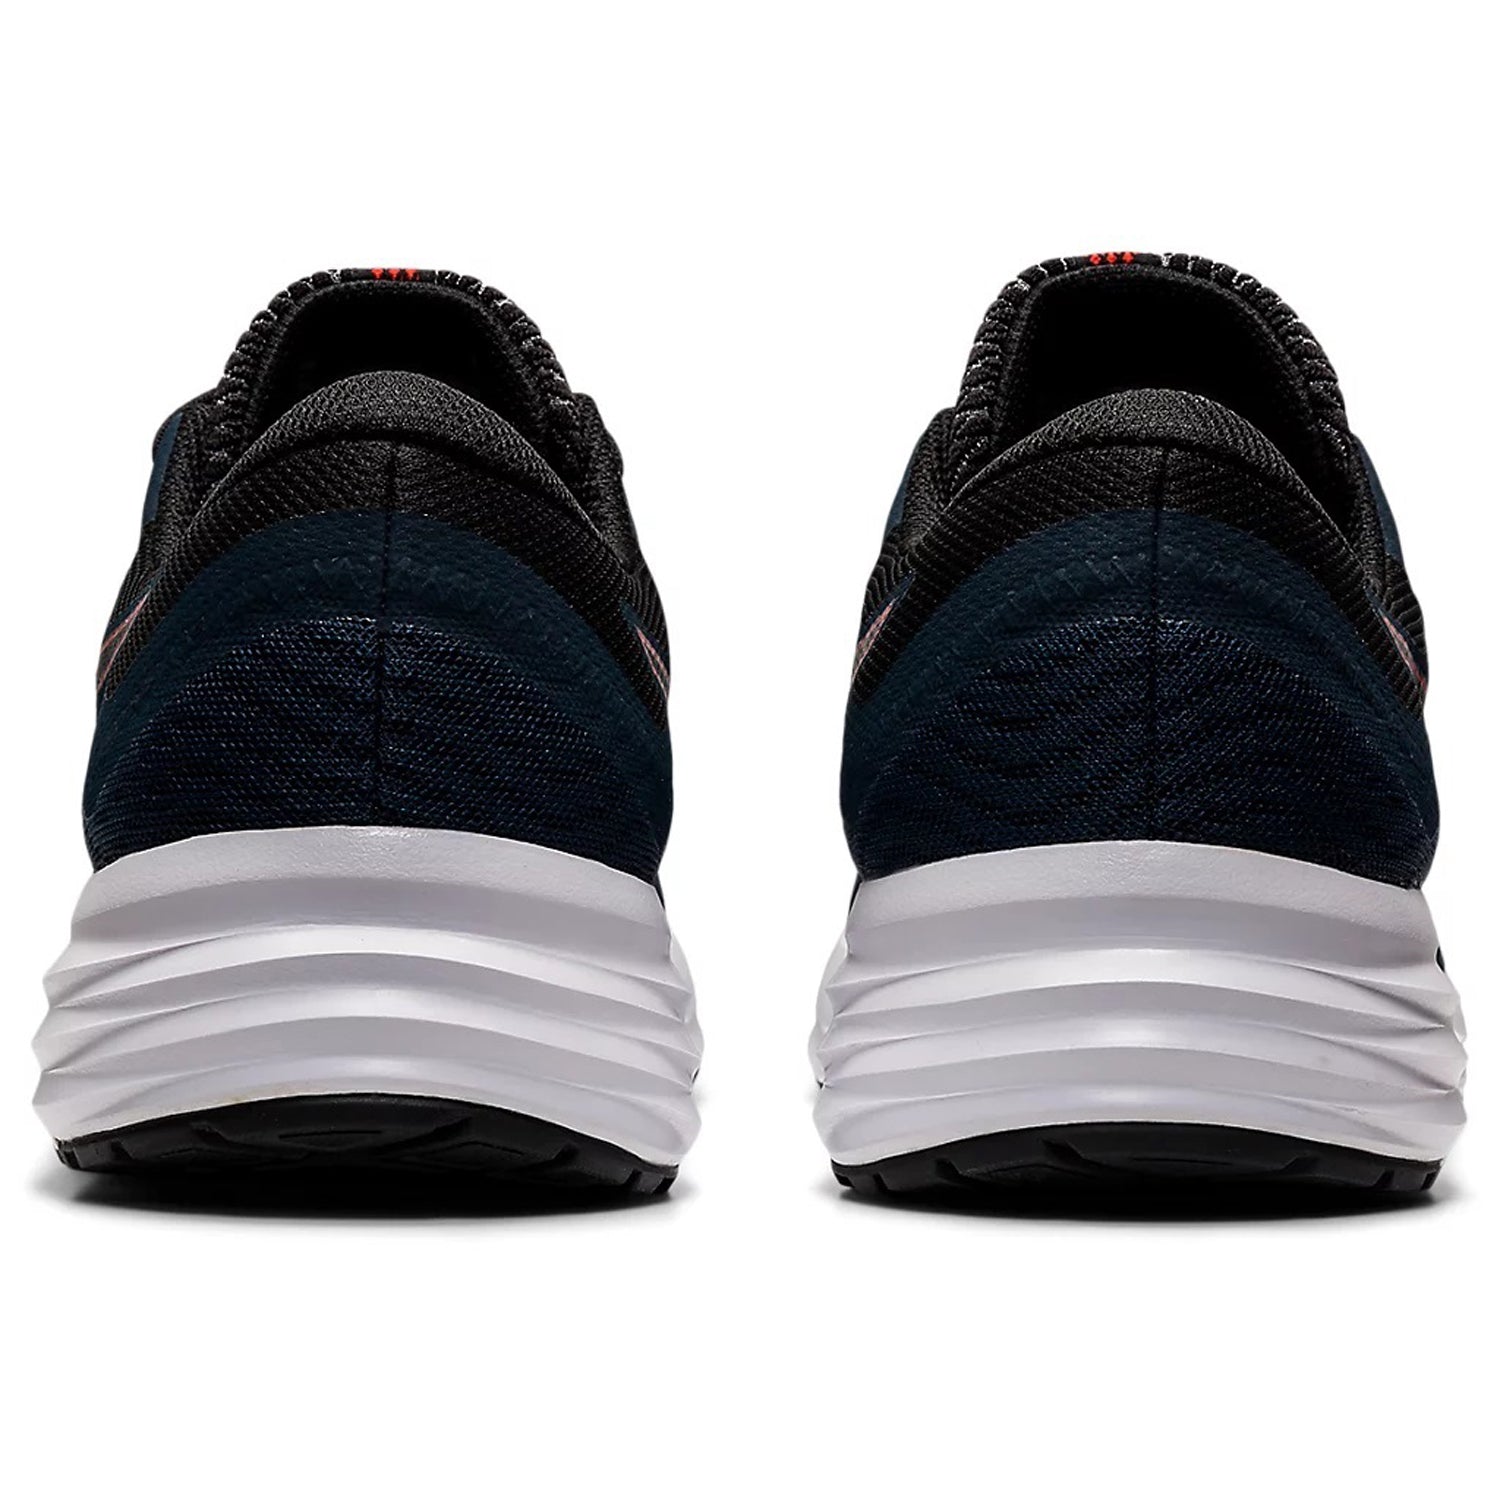 ASICS Men's Patriot 12 Running Shoe, French Blue/Black - Best Price online Prokicksports.com